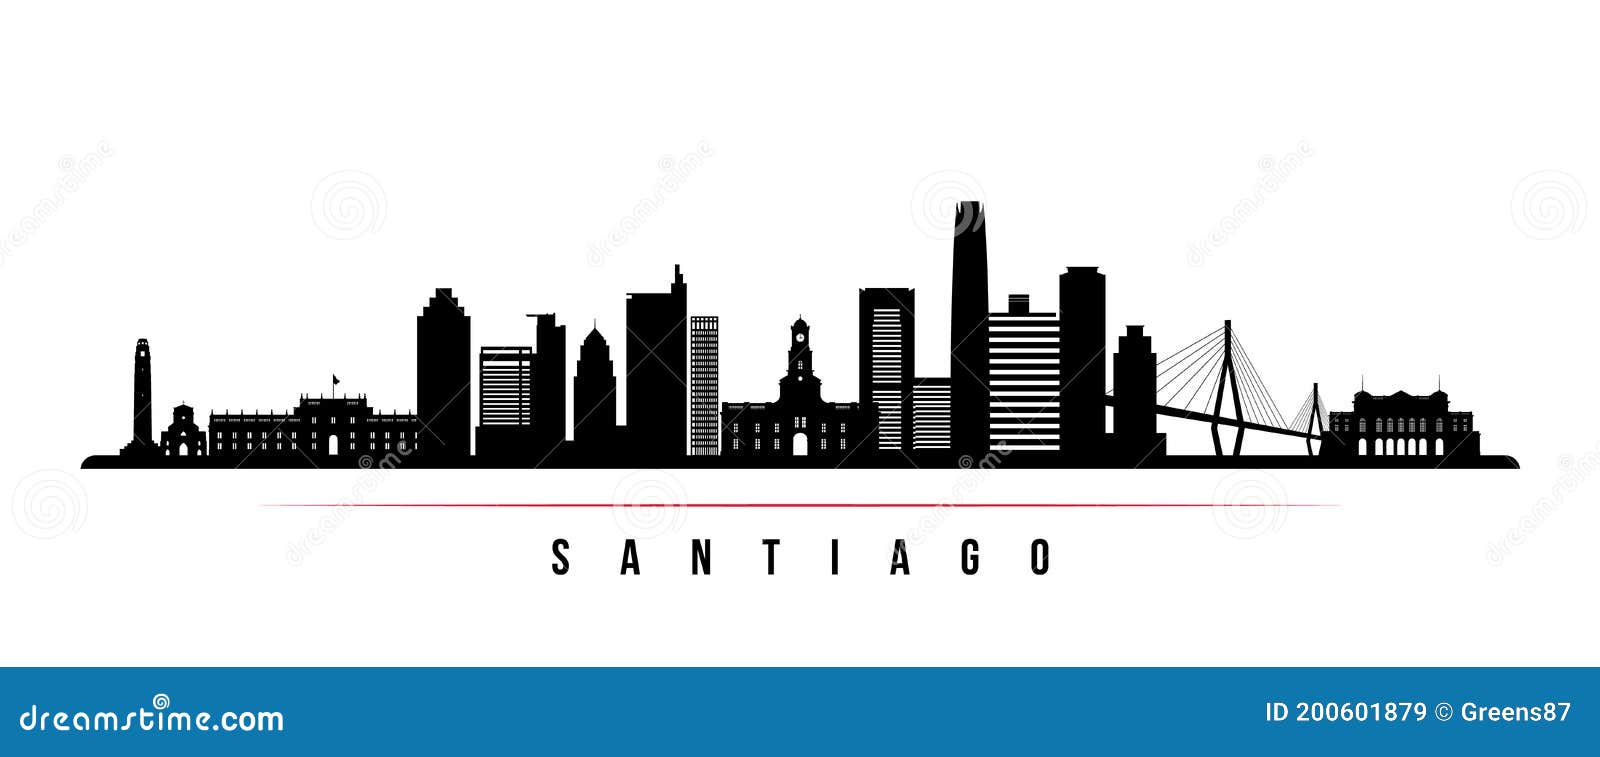 santiago skyline horizontal banner.